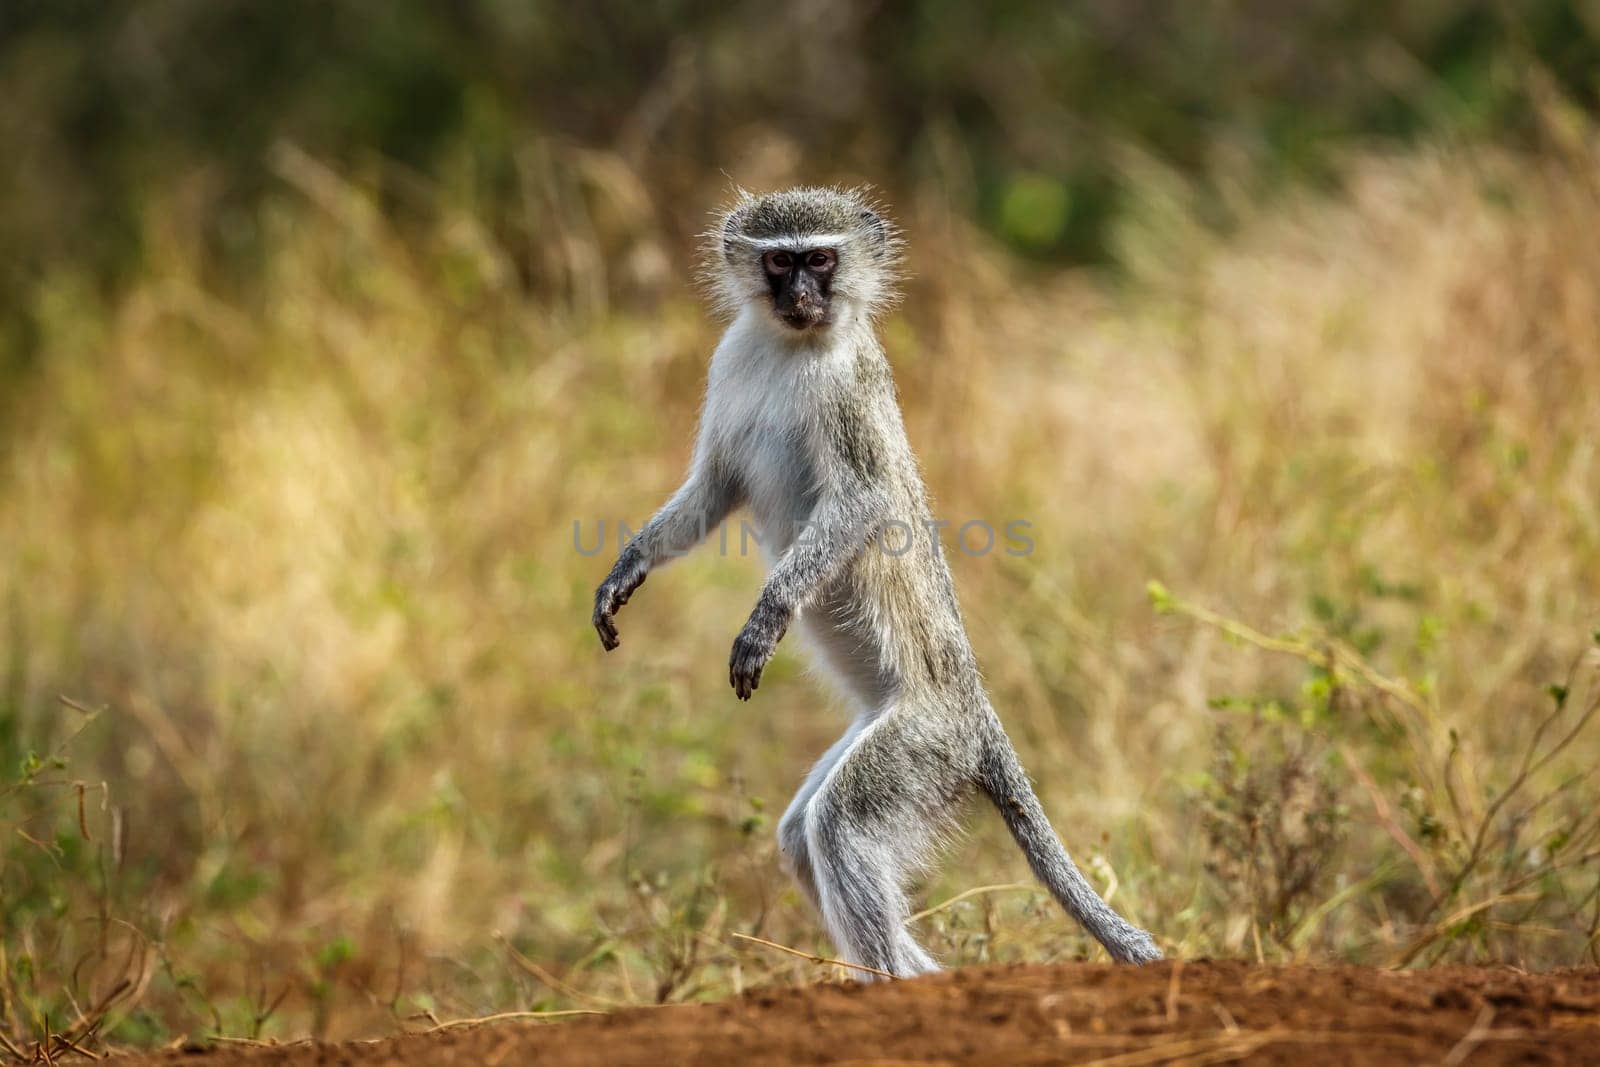 Vervet monkey in Kruger national park, South Africa by PACOCOMO